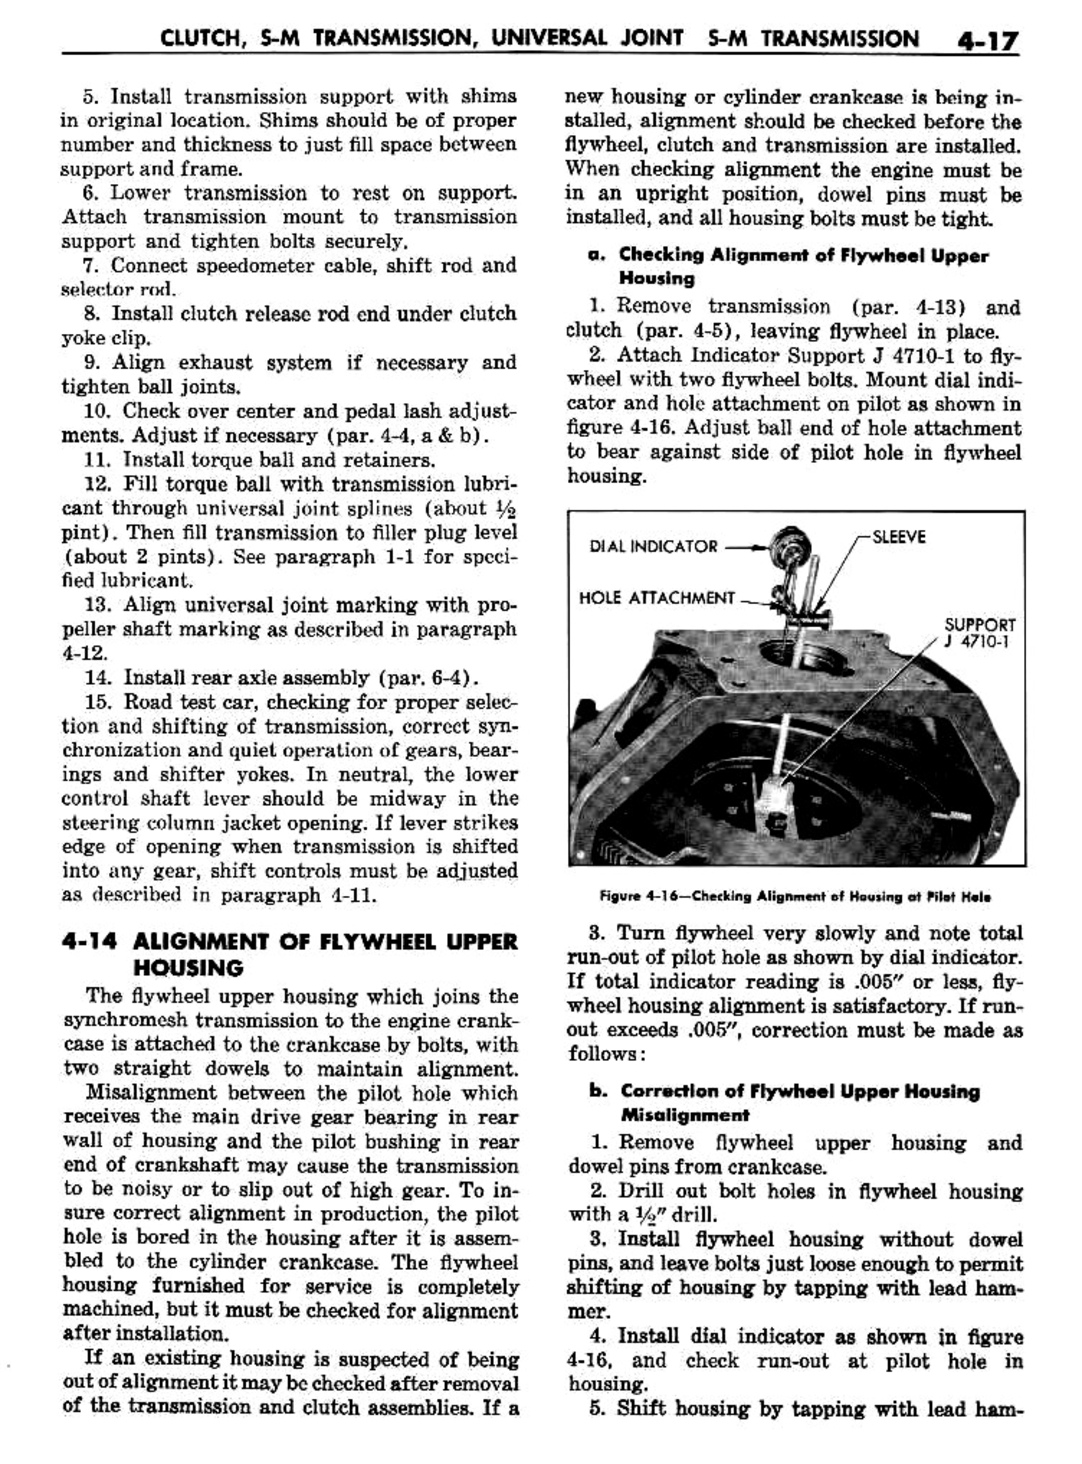 n_05 1960 Buick Shop Manual - Clutch & Man Trans-017-017.jpg